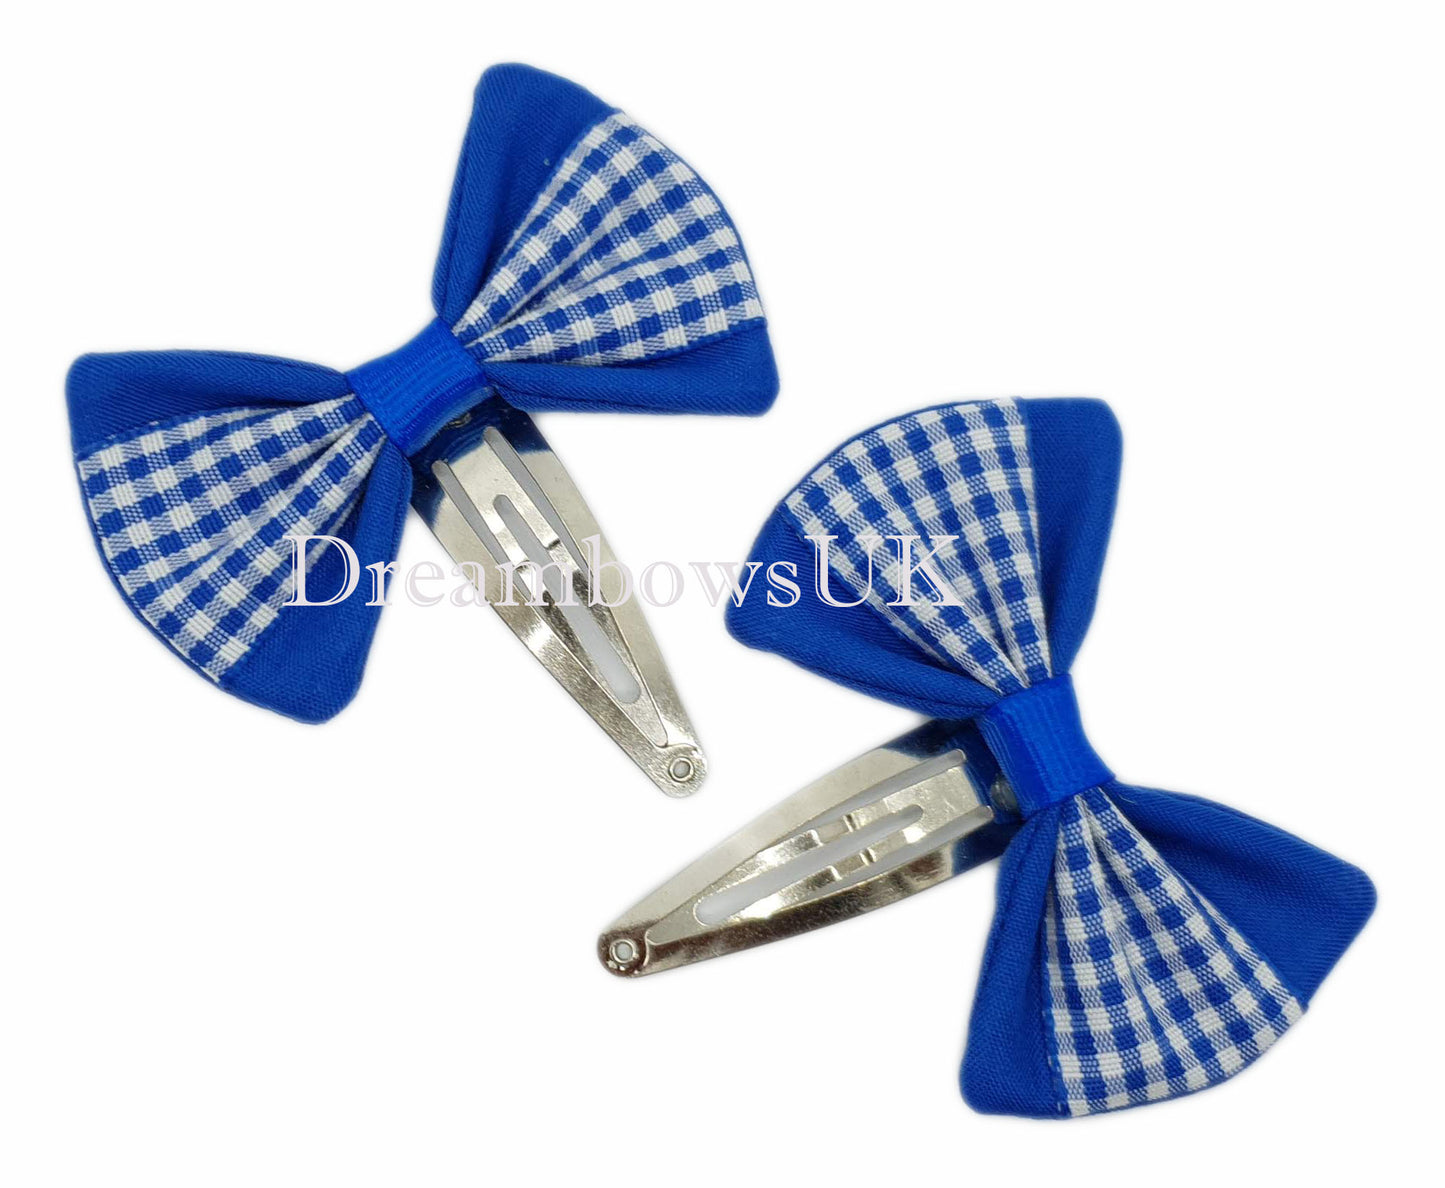 2x Royal blue gingham hair bows